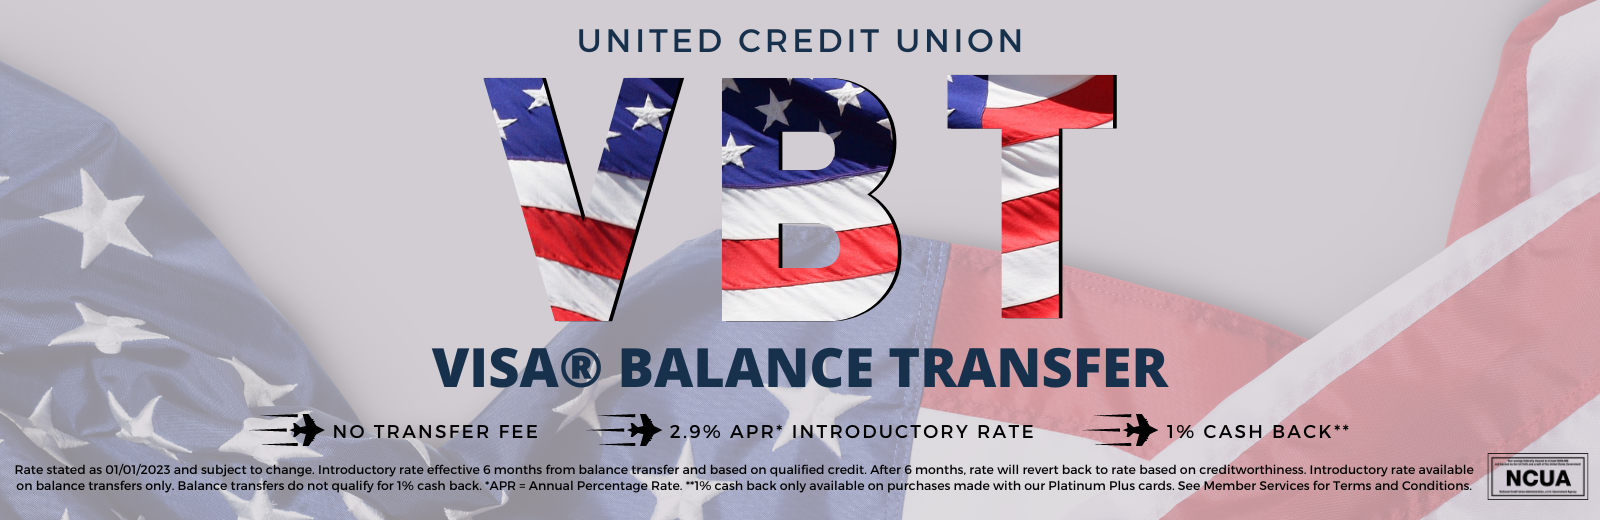 United Credit Union | Credit Union Columbia MO - United Credit Union